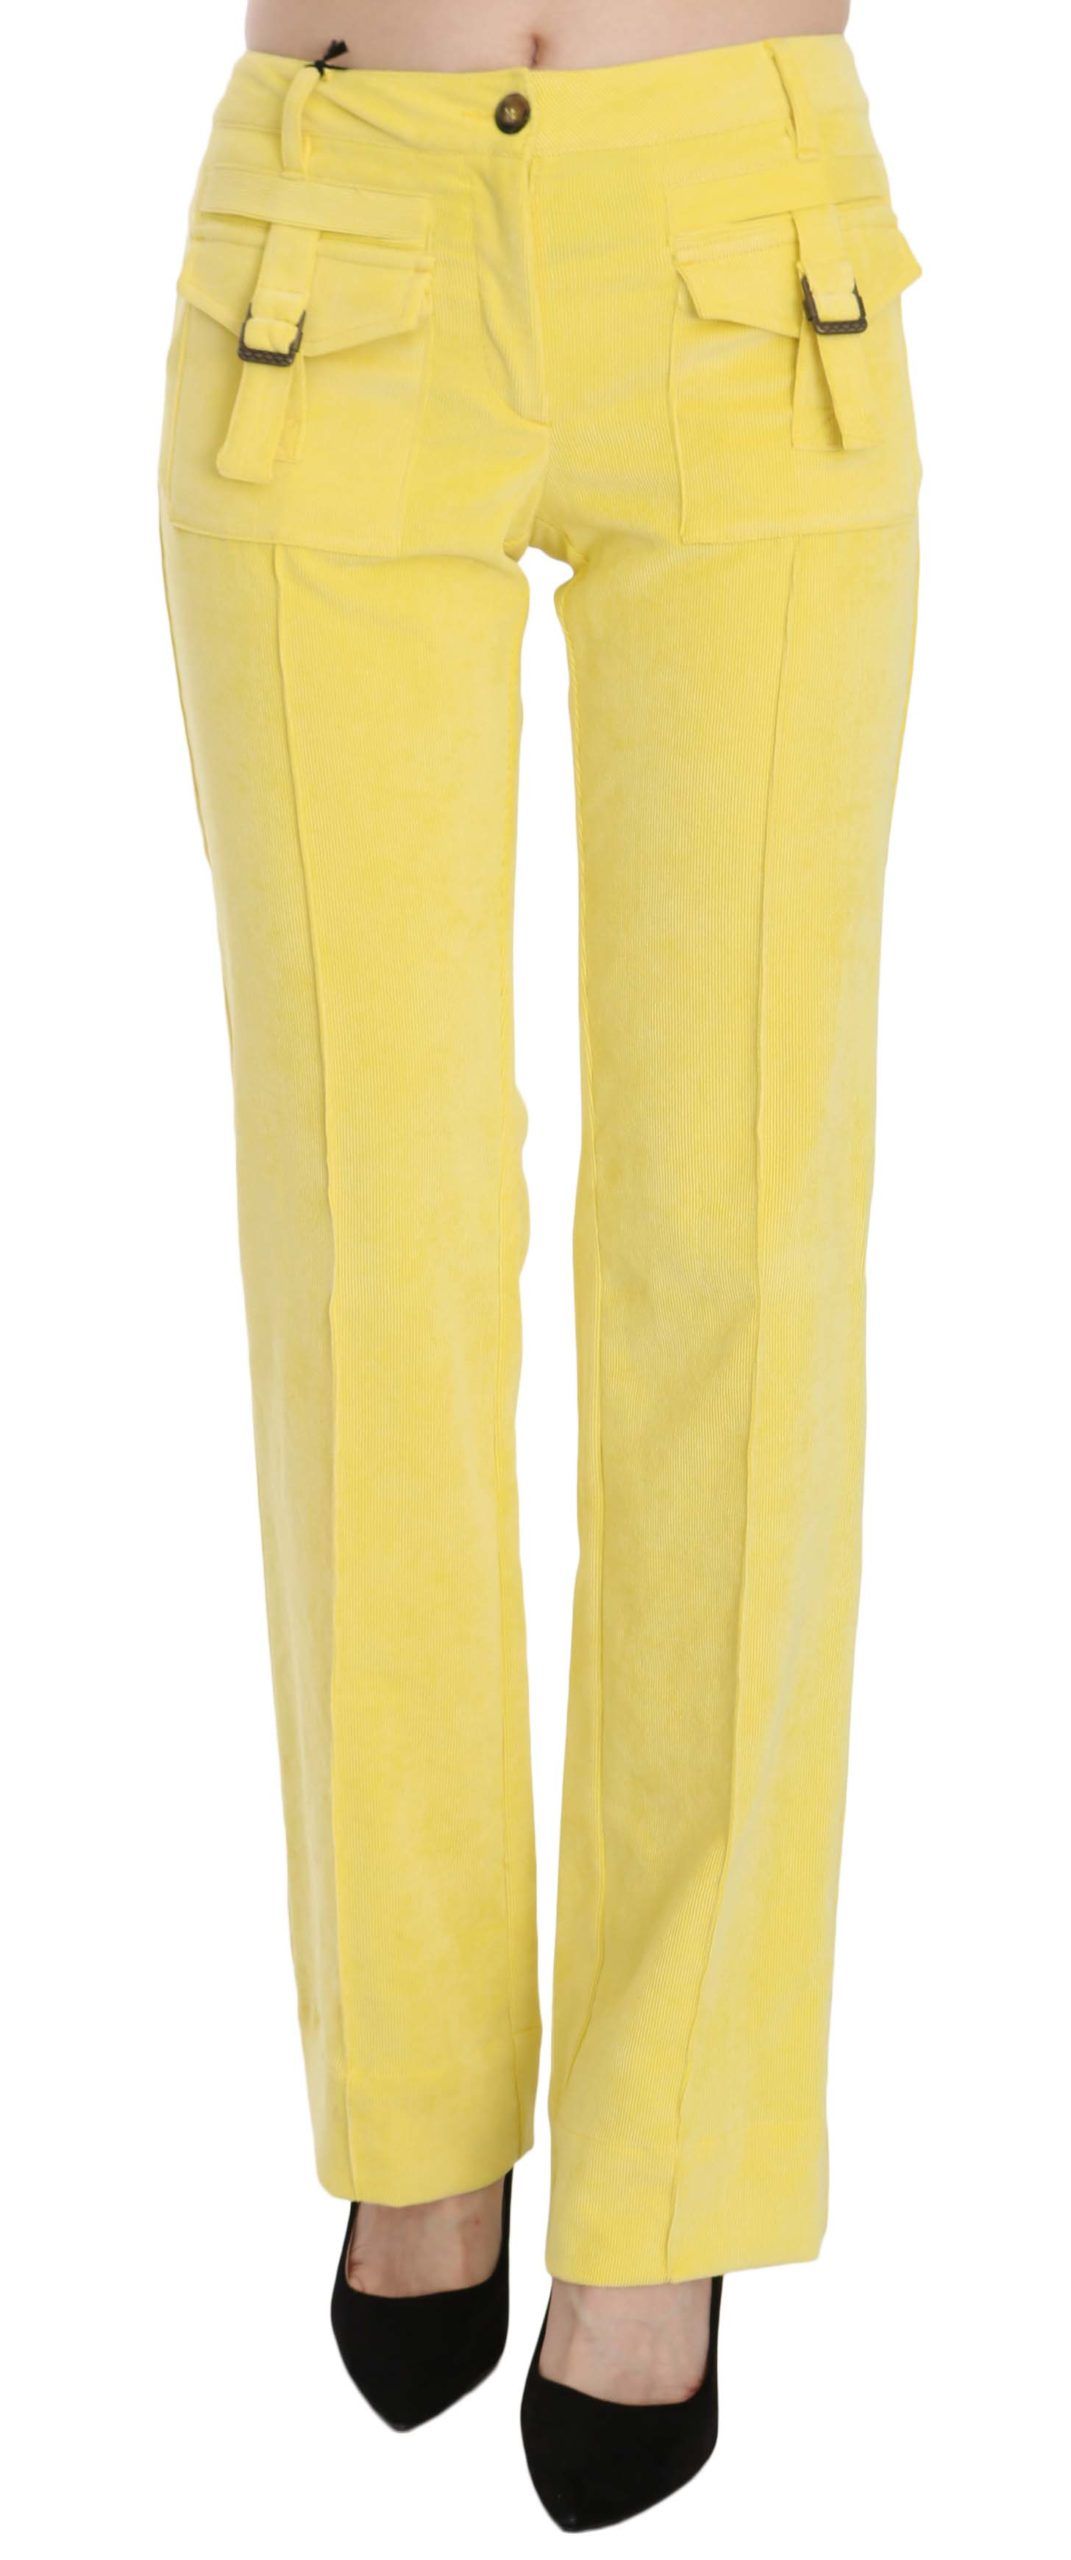 Just Cavalli Yellow Corduroy Mid Waist Straight Trousers Pants